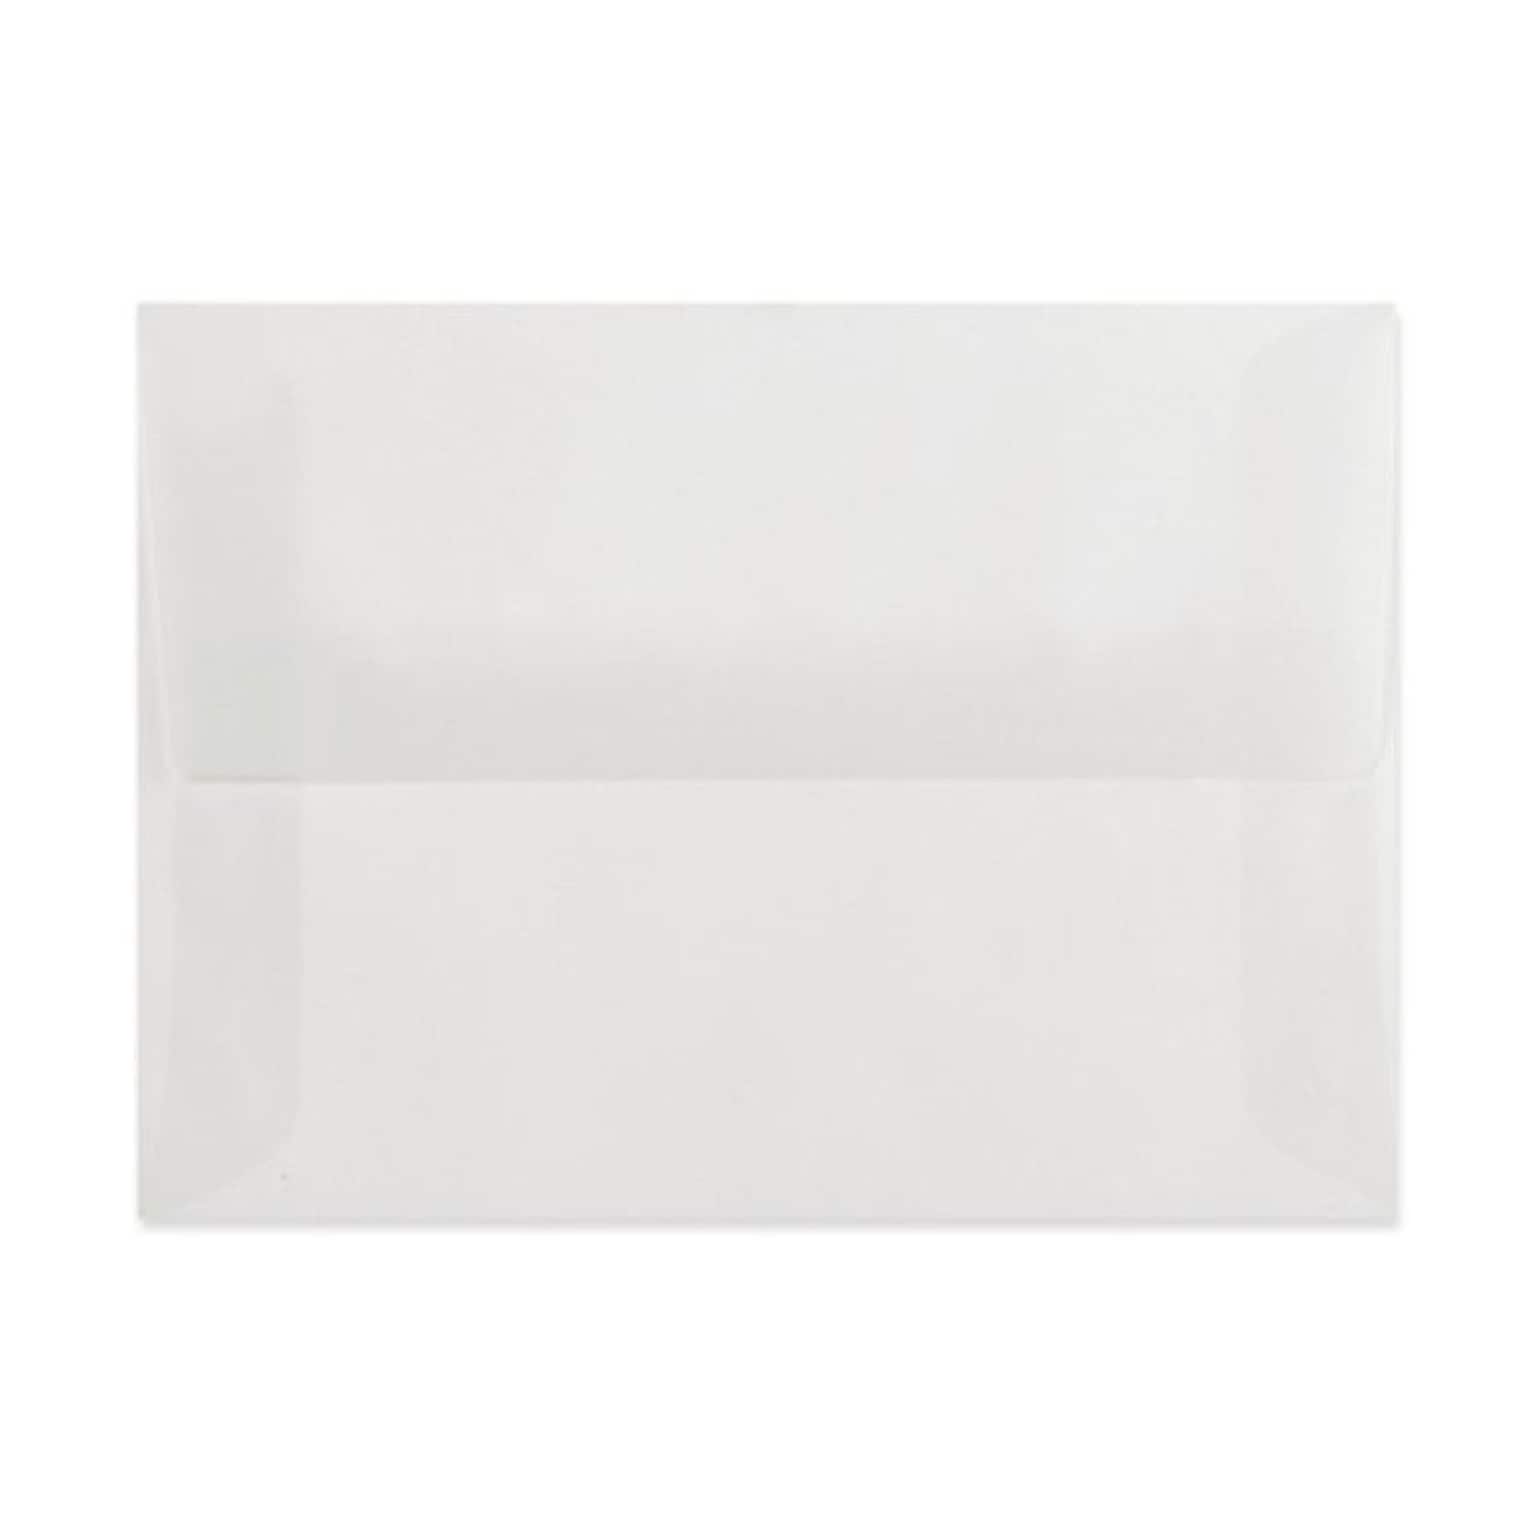 LUX A7 Invitation Envelopes (5 1/4 x 7 1/4) 250/Box, Clear Translucent (4880-00-250)